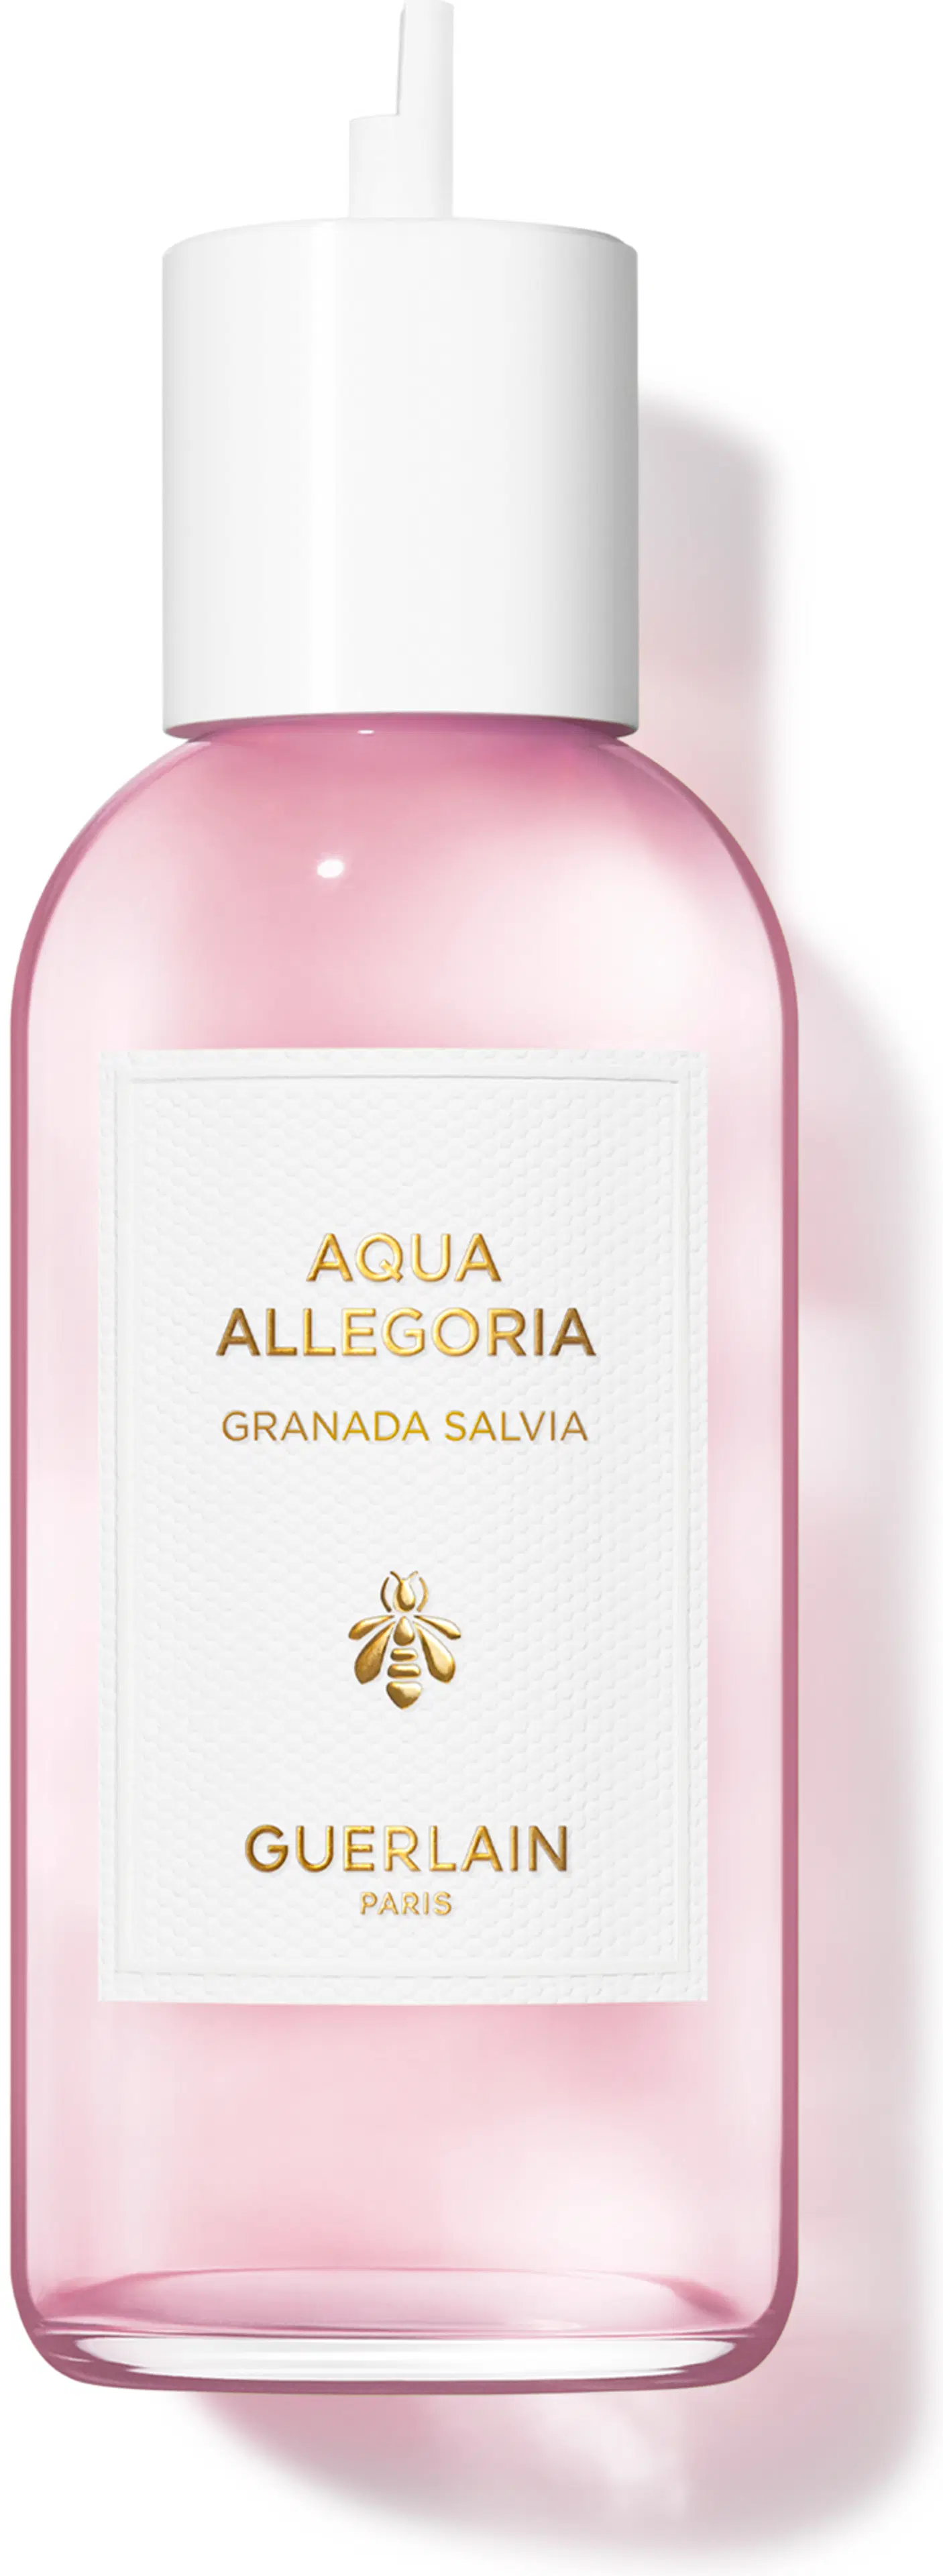 Guerlain Aqua Allegoria Granada Salvia EDT refill 200 ml